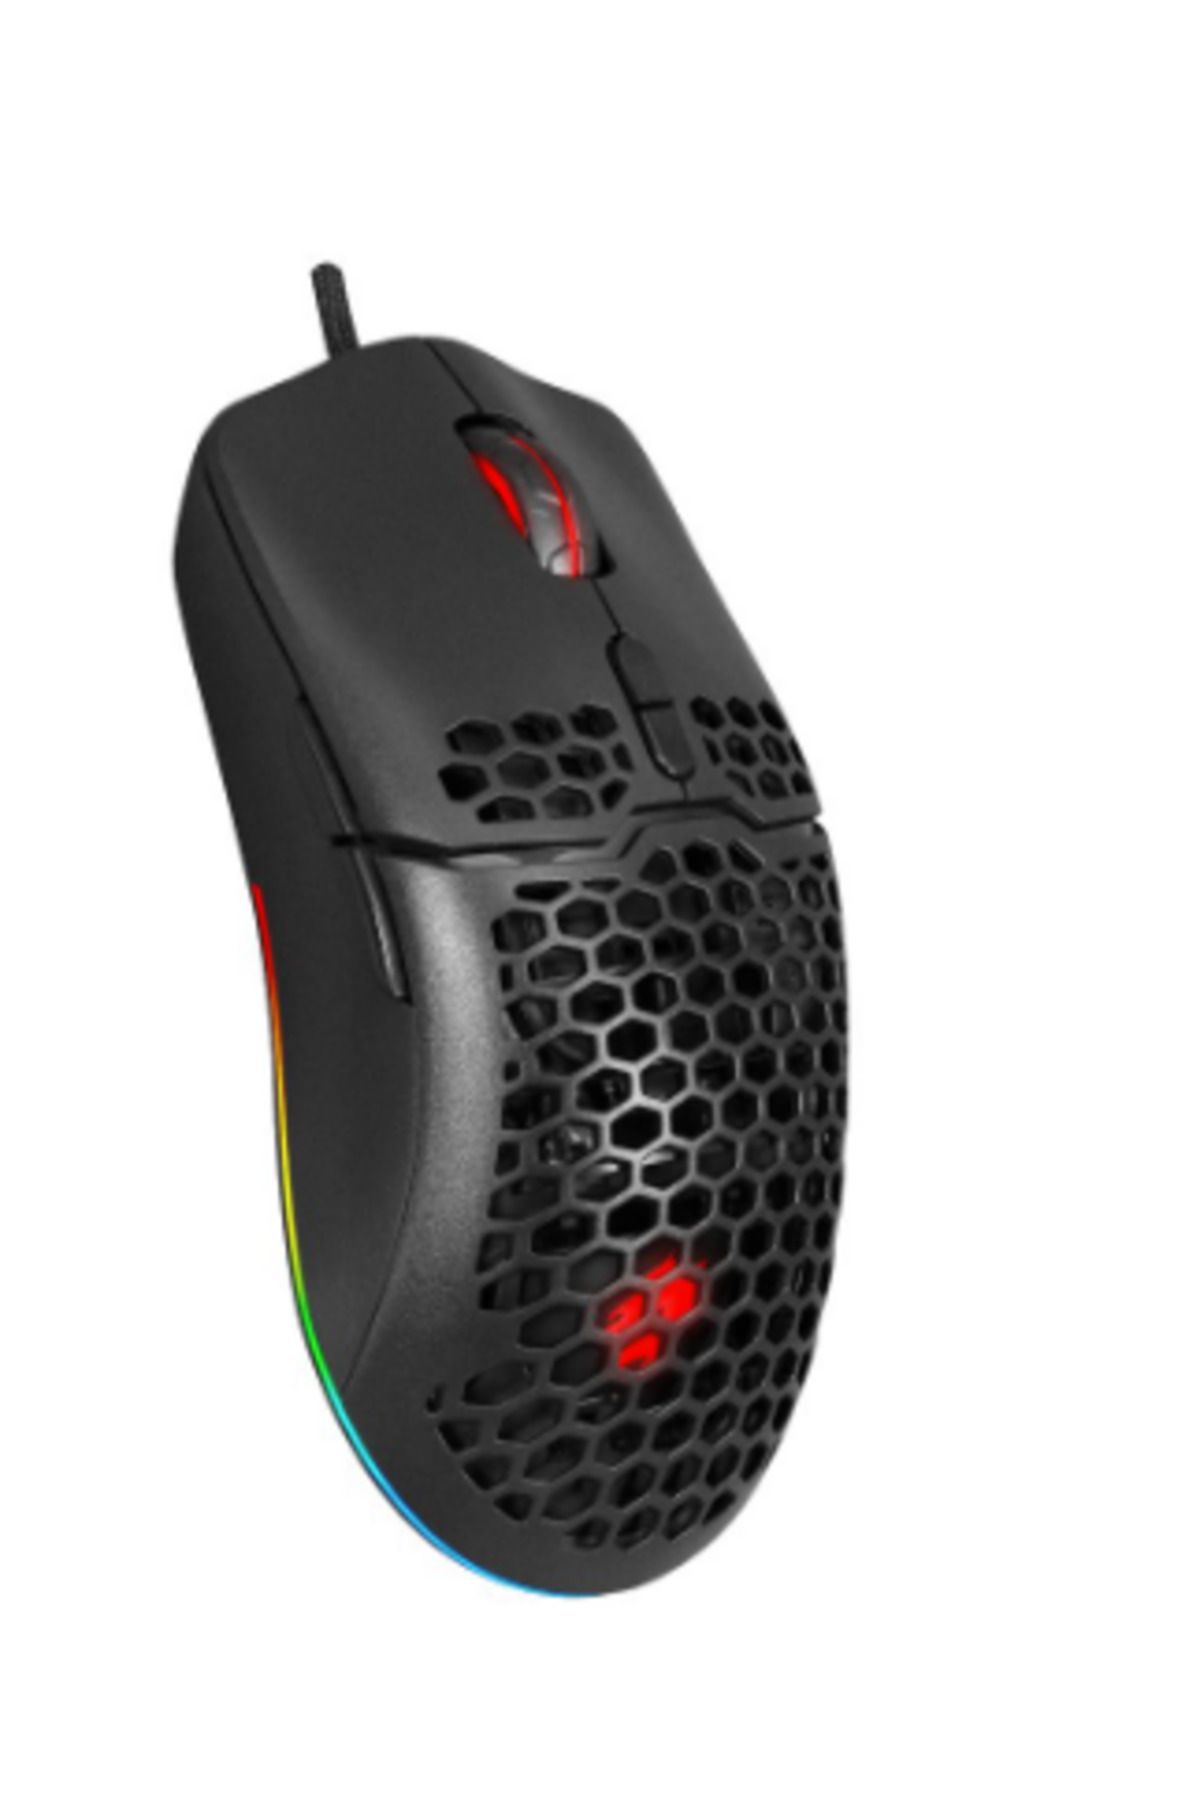 Gamebooster AirForce M700 Gaming Mouse   Uyumlu